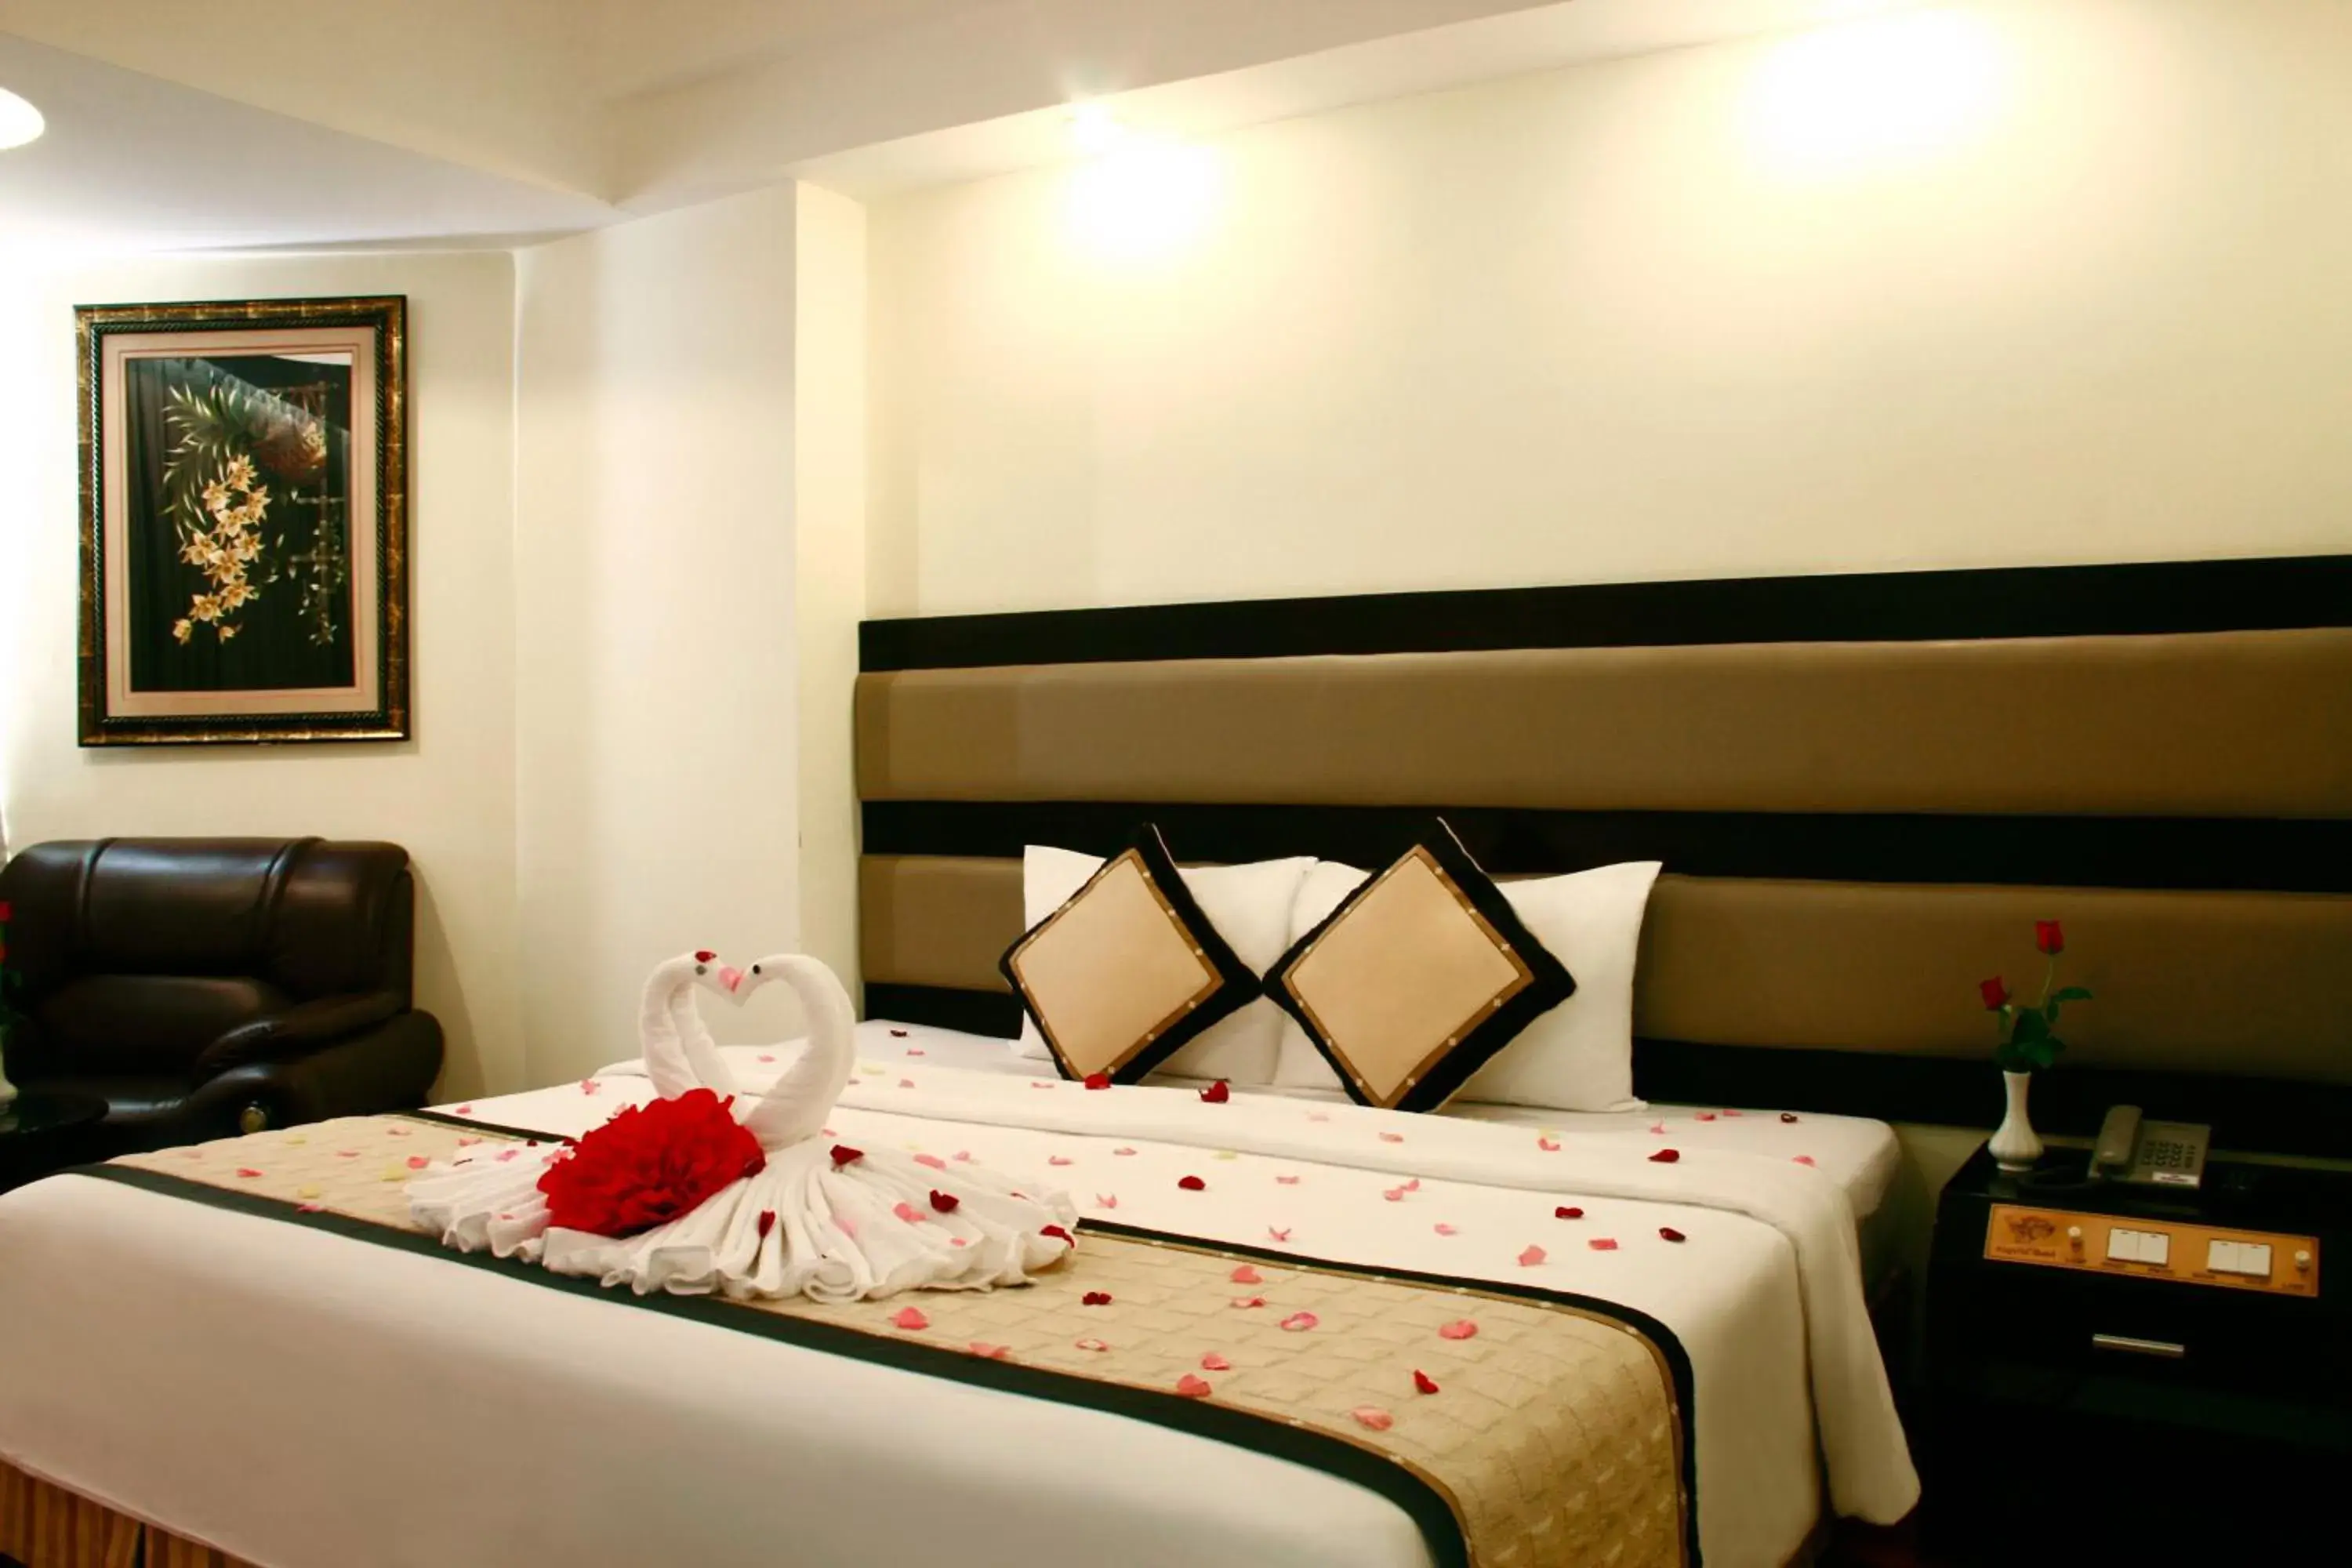 Bedroom, Bed in Angella Hotel Nha Trang